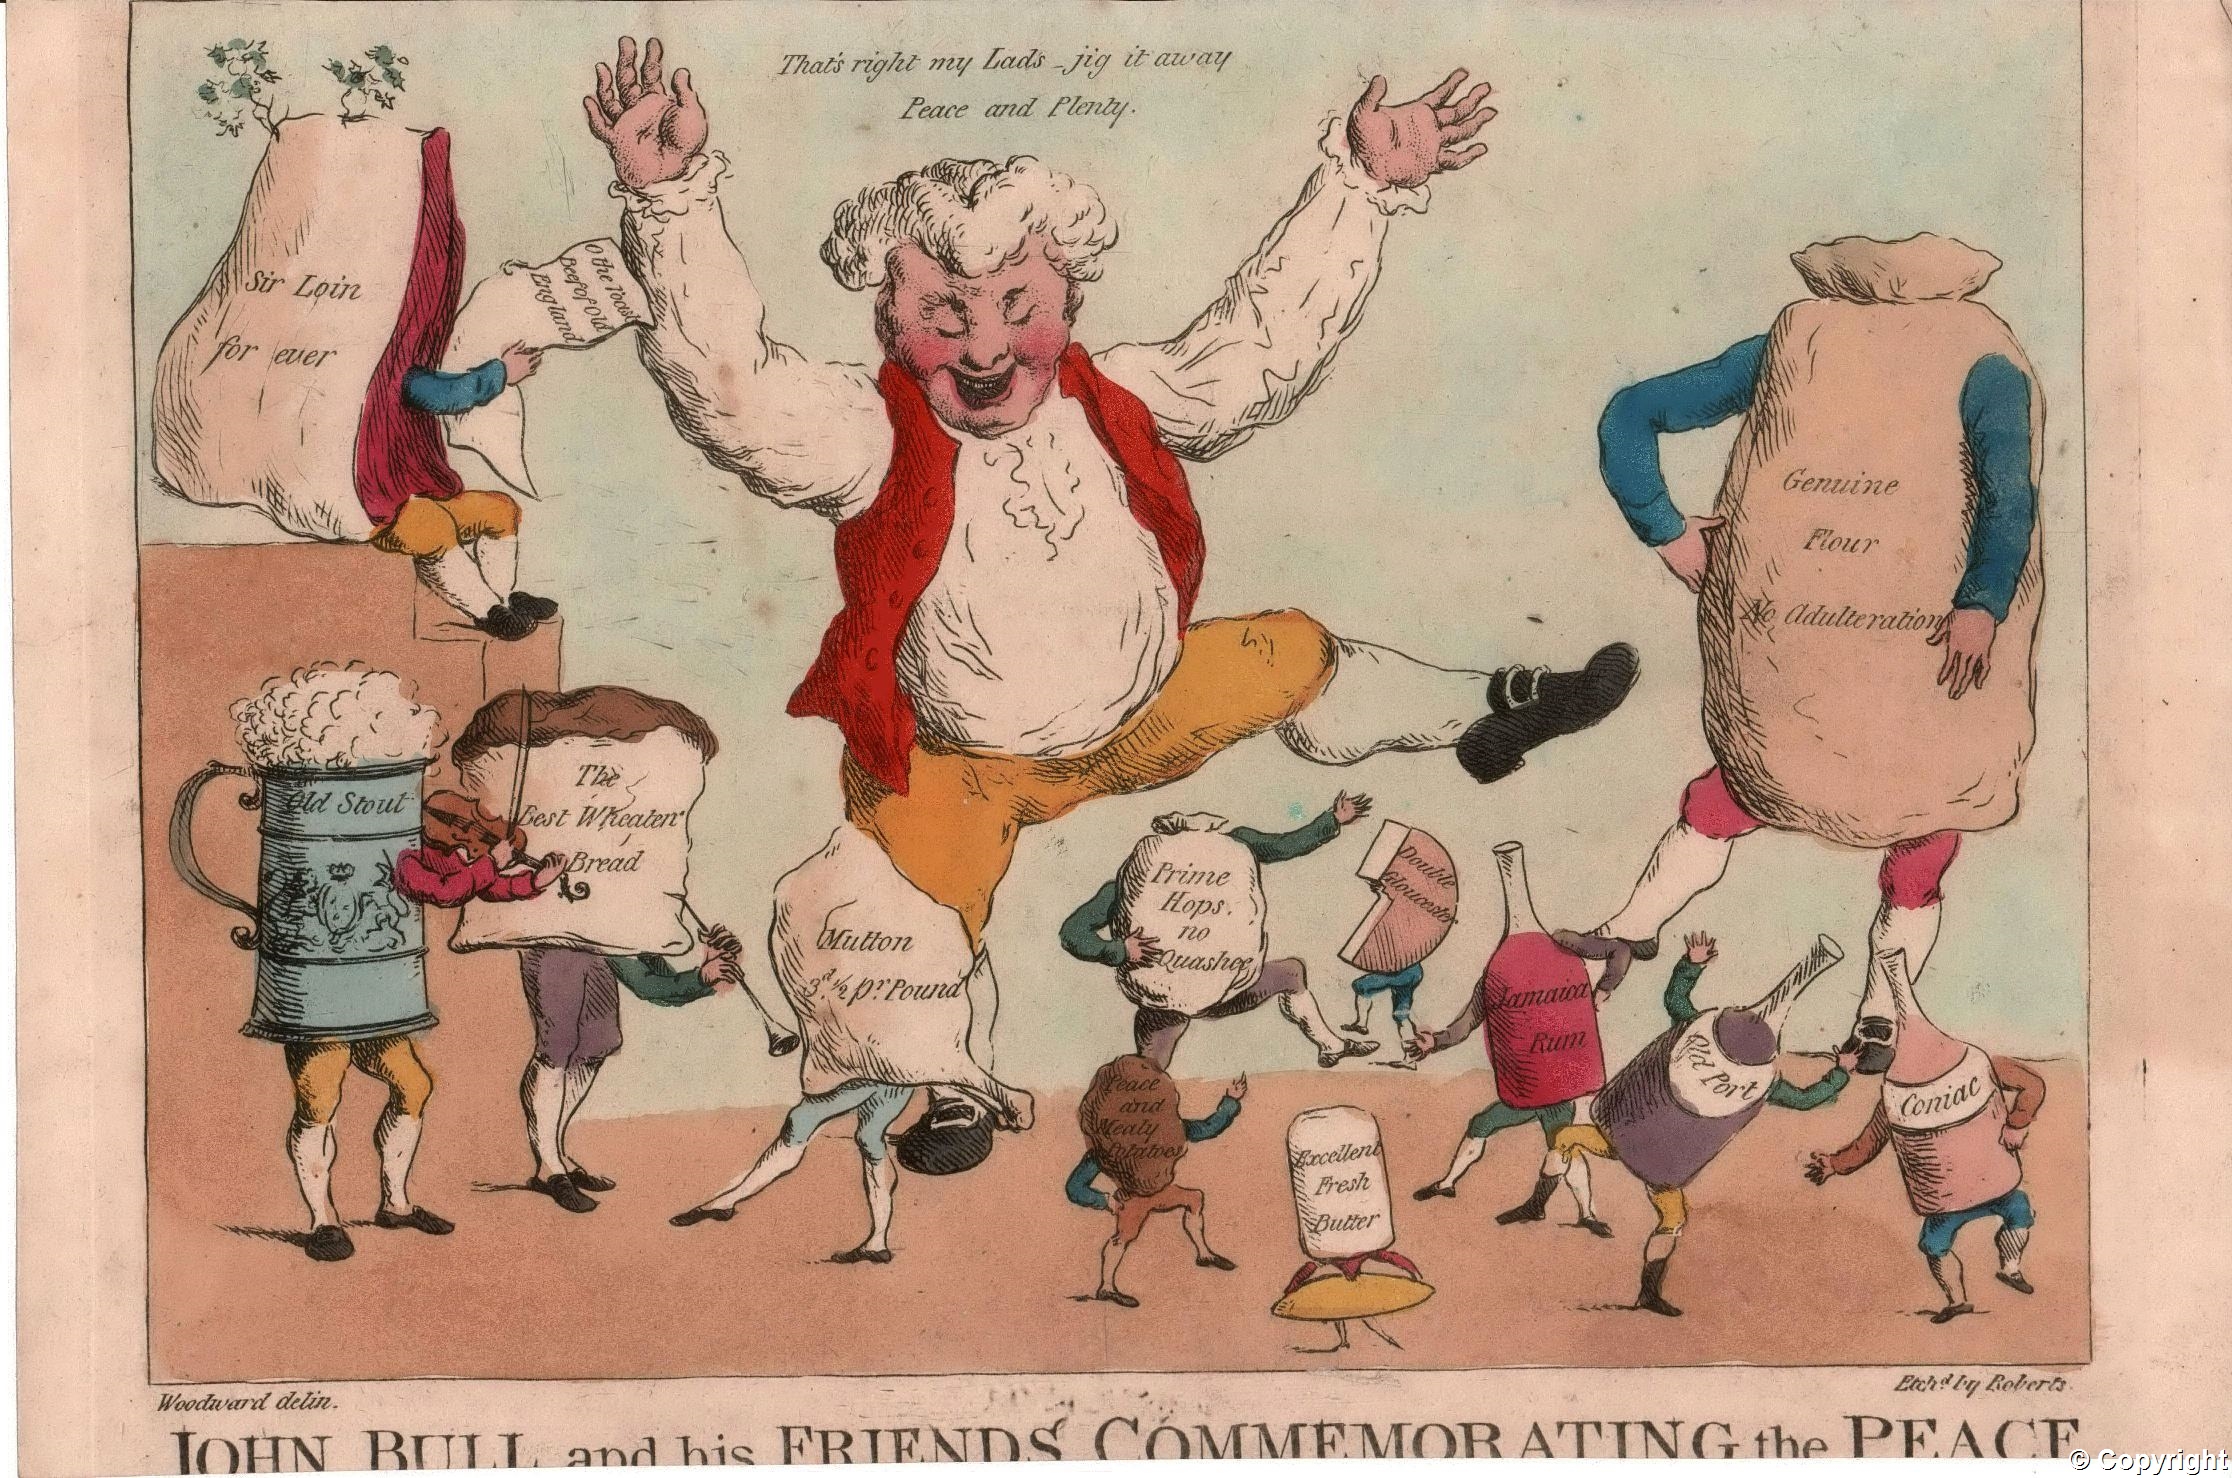 George M. Woodward (1767-1809), cartoonist